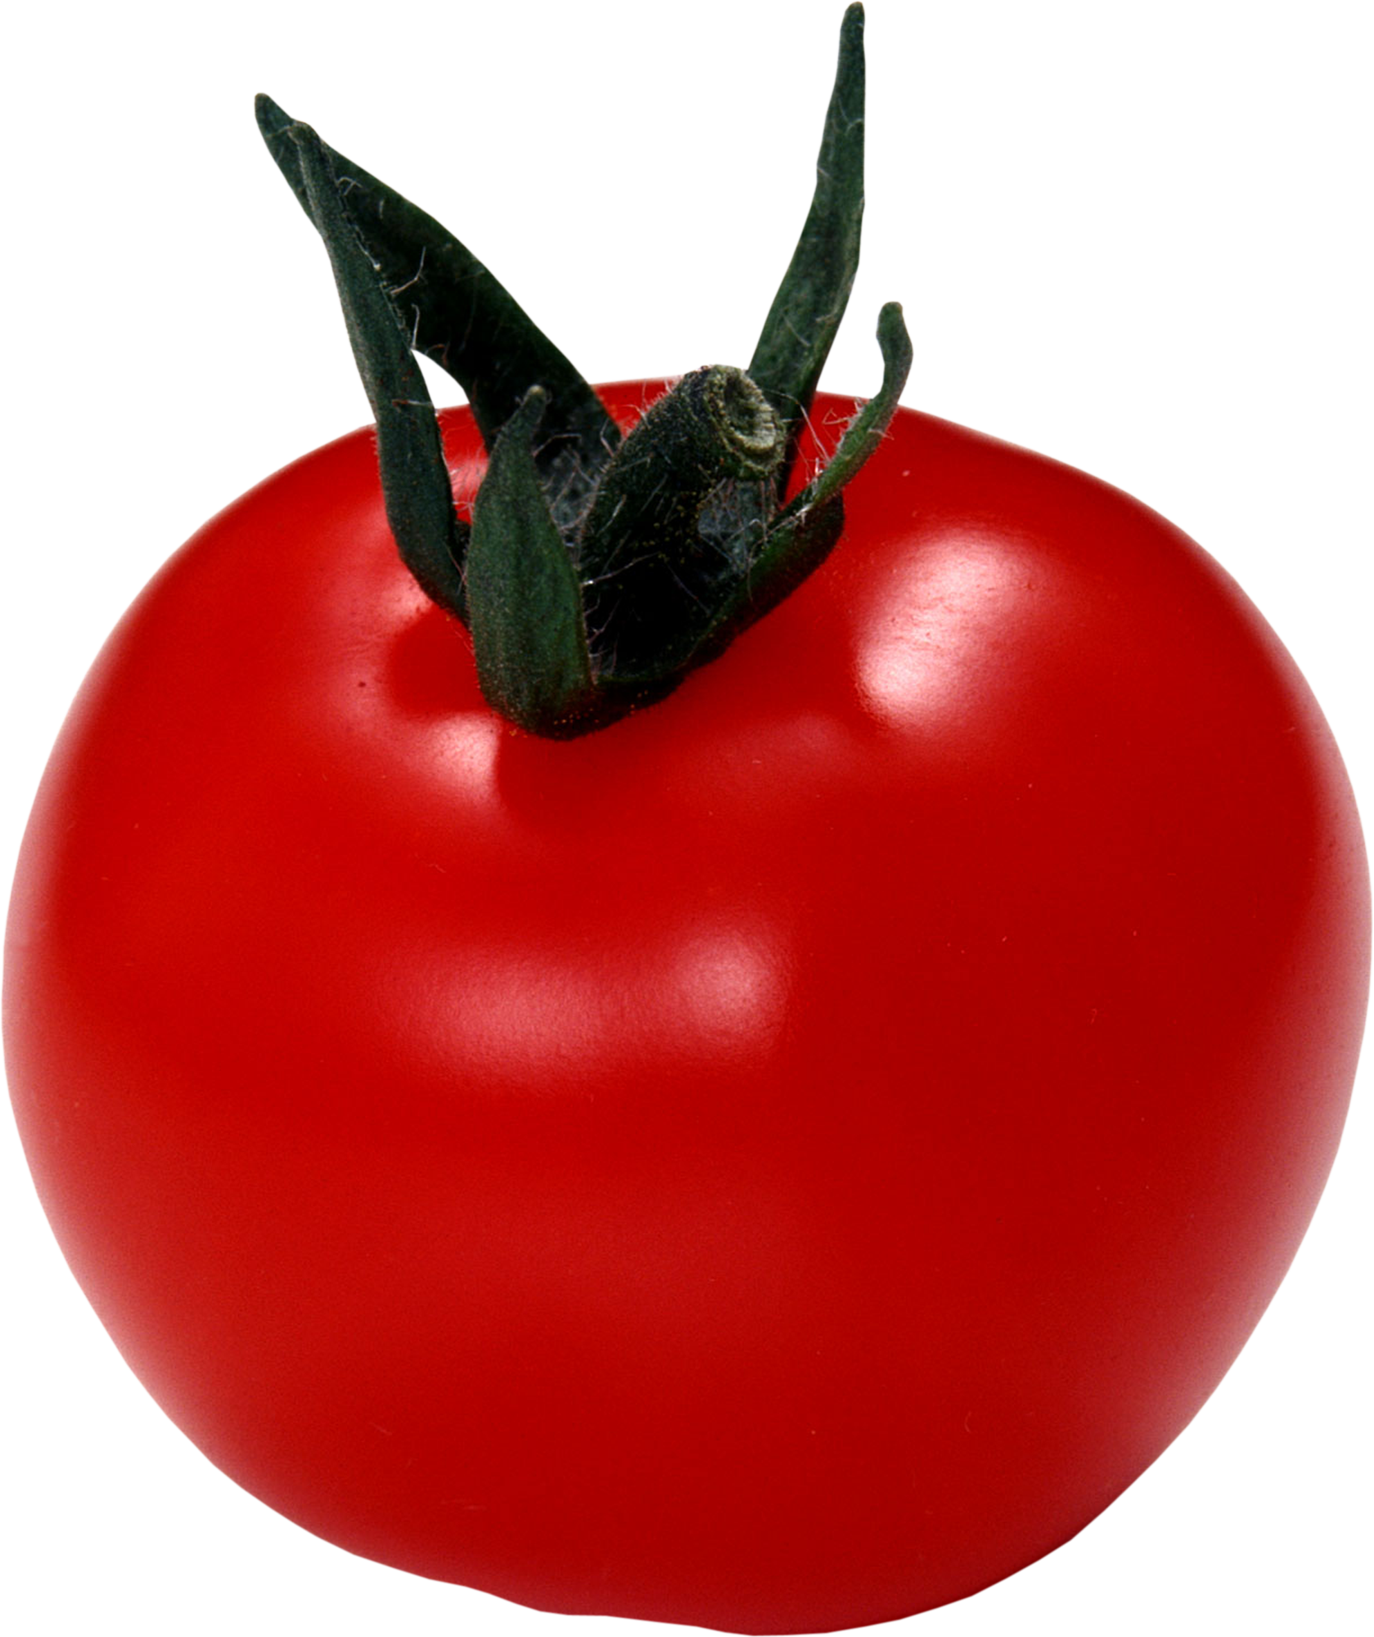 Tomates vermelhos grandes